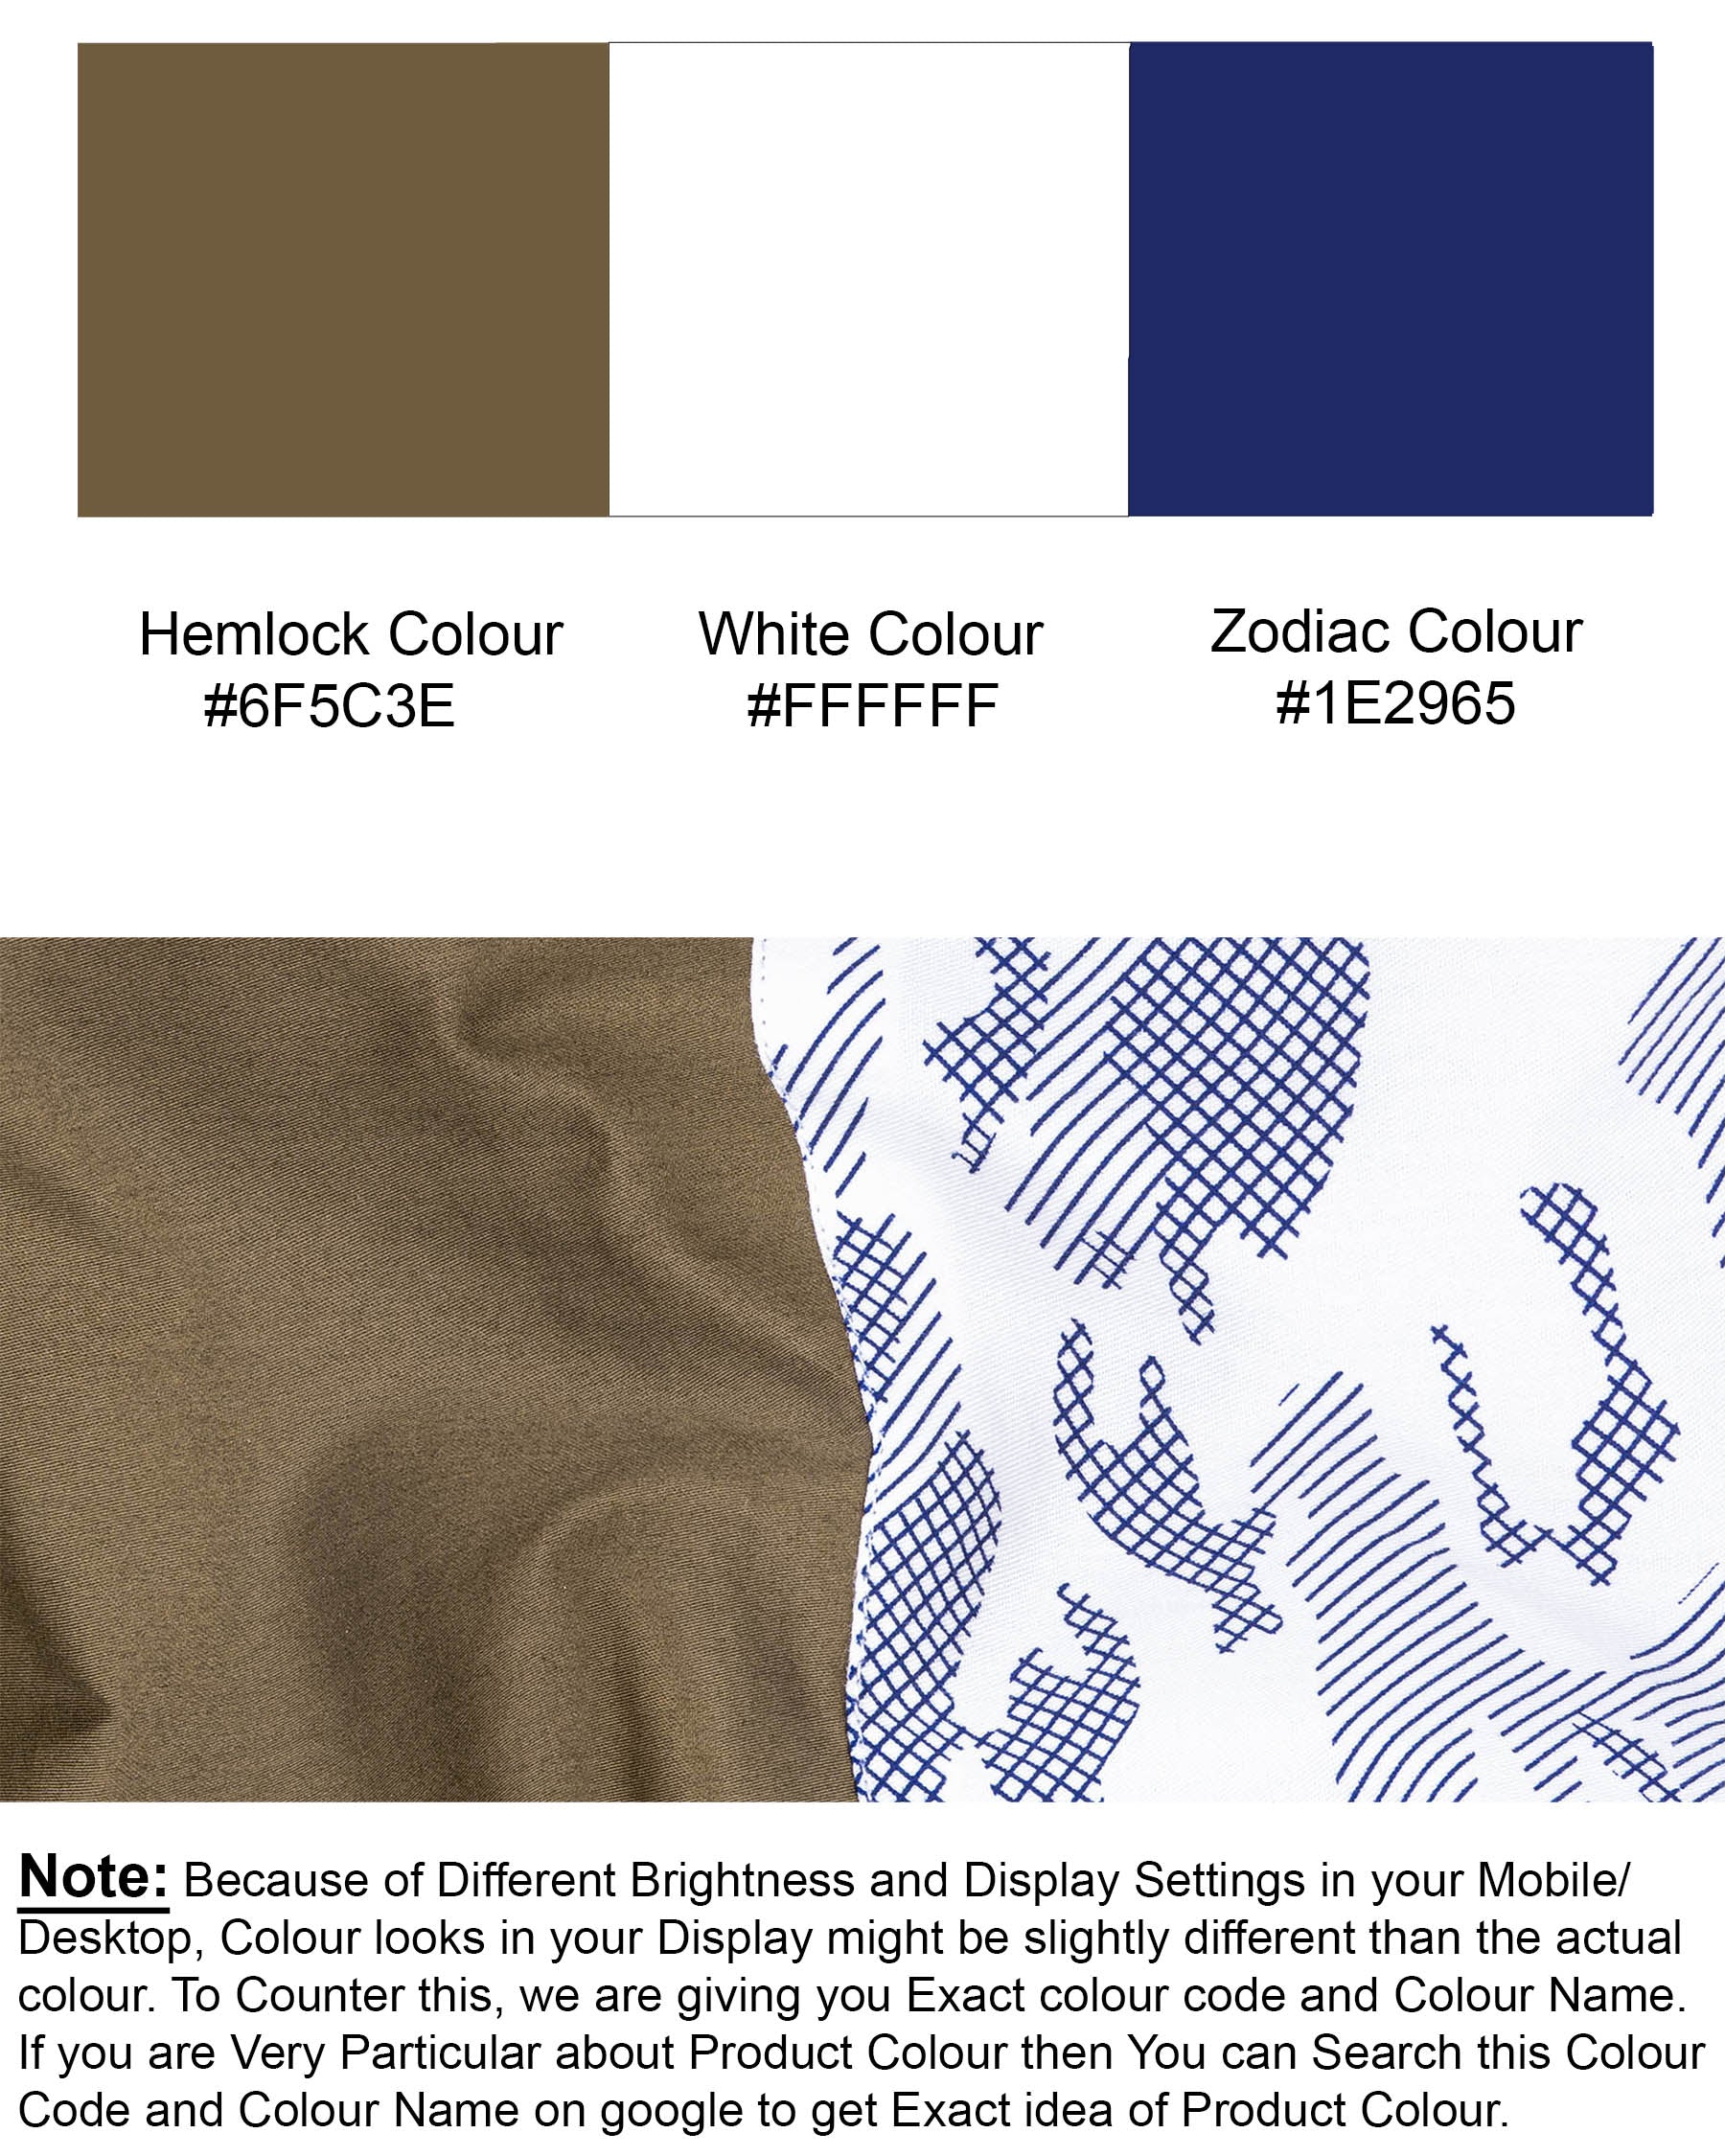 Hemlock Brown with Bright White Stitched Design Super Soft Premium Cotton Designer Shirt 7084-P135-38,7084-P135-38,7084-P135-39,7084-P135-39,7084-P135-40,7084-P135-40,7084-P135-42,7084-P135-42,7084-P135-44,7084-P135-44,7084-P135-46,7084-P135-46,7084-P135-48,7084-P135-48,7084-P135-50,7084-P135-50,7084-P135-52,7084-P135-52